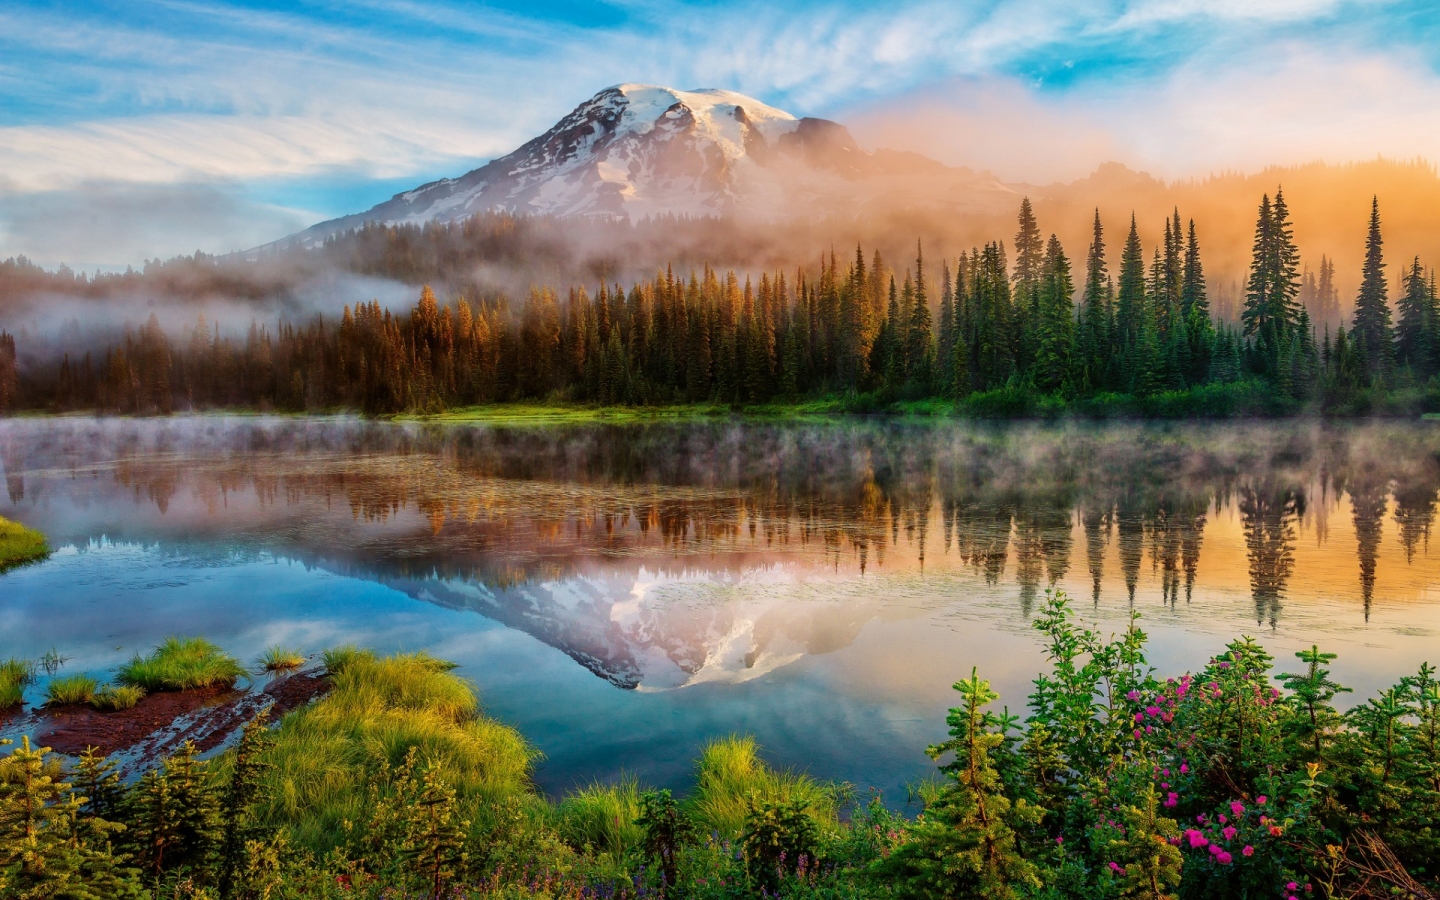 Mount Rainier Landscape for 1440 x 900 widescreen resolution